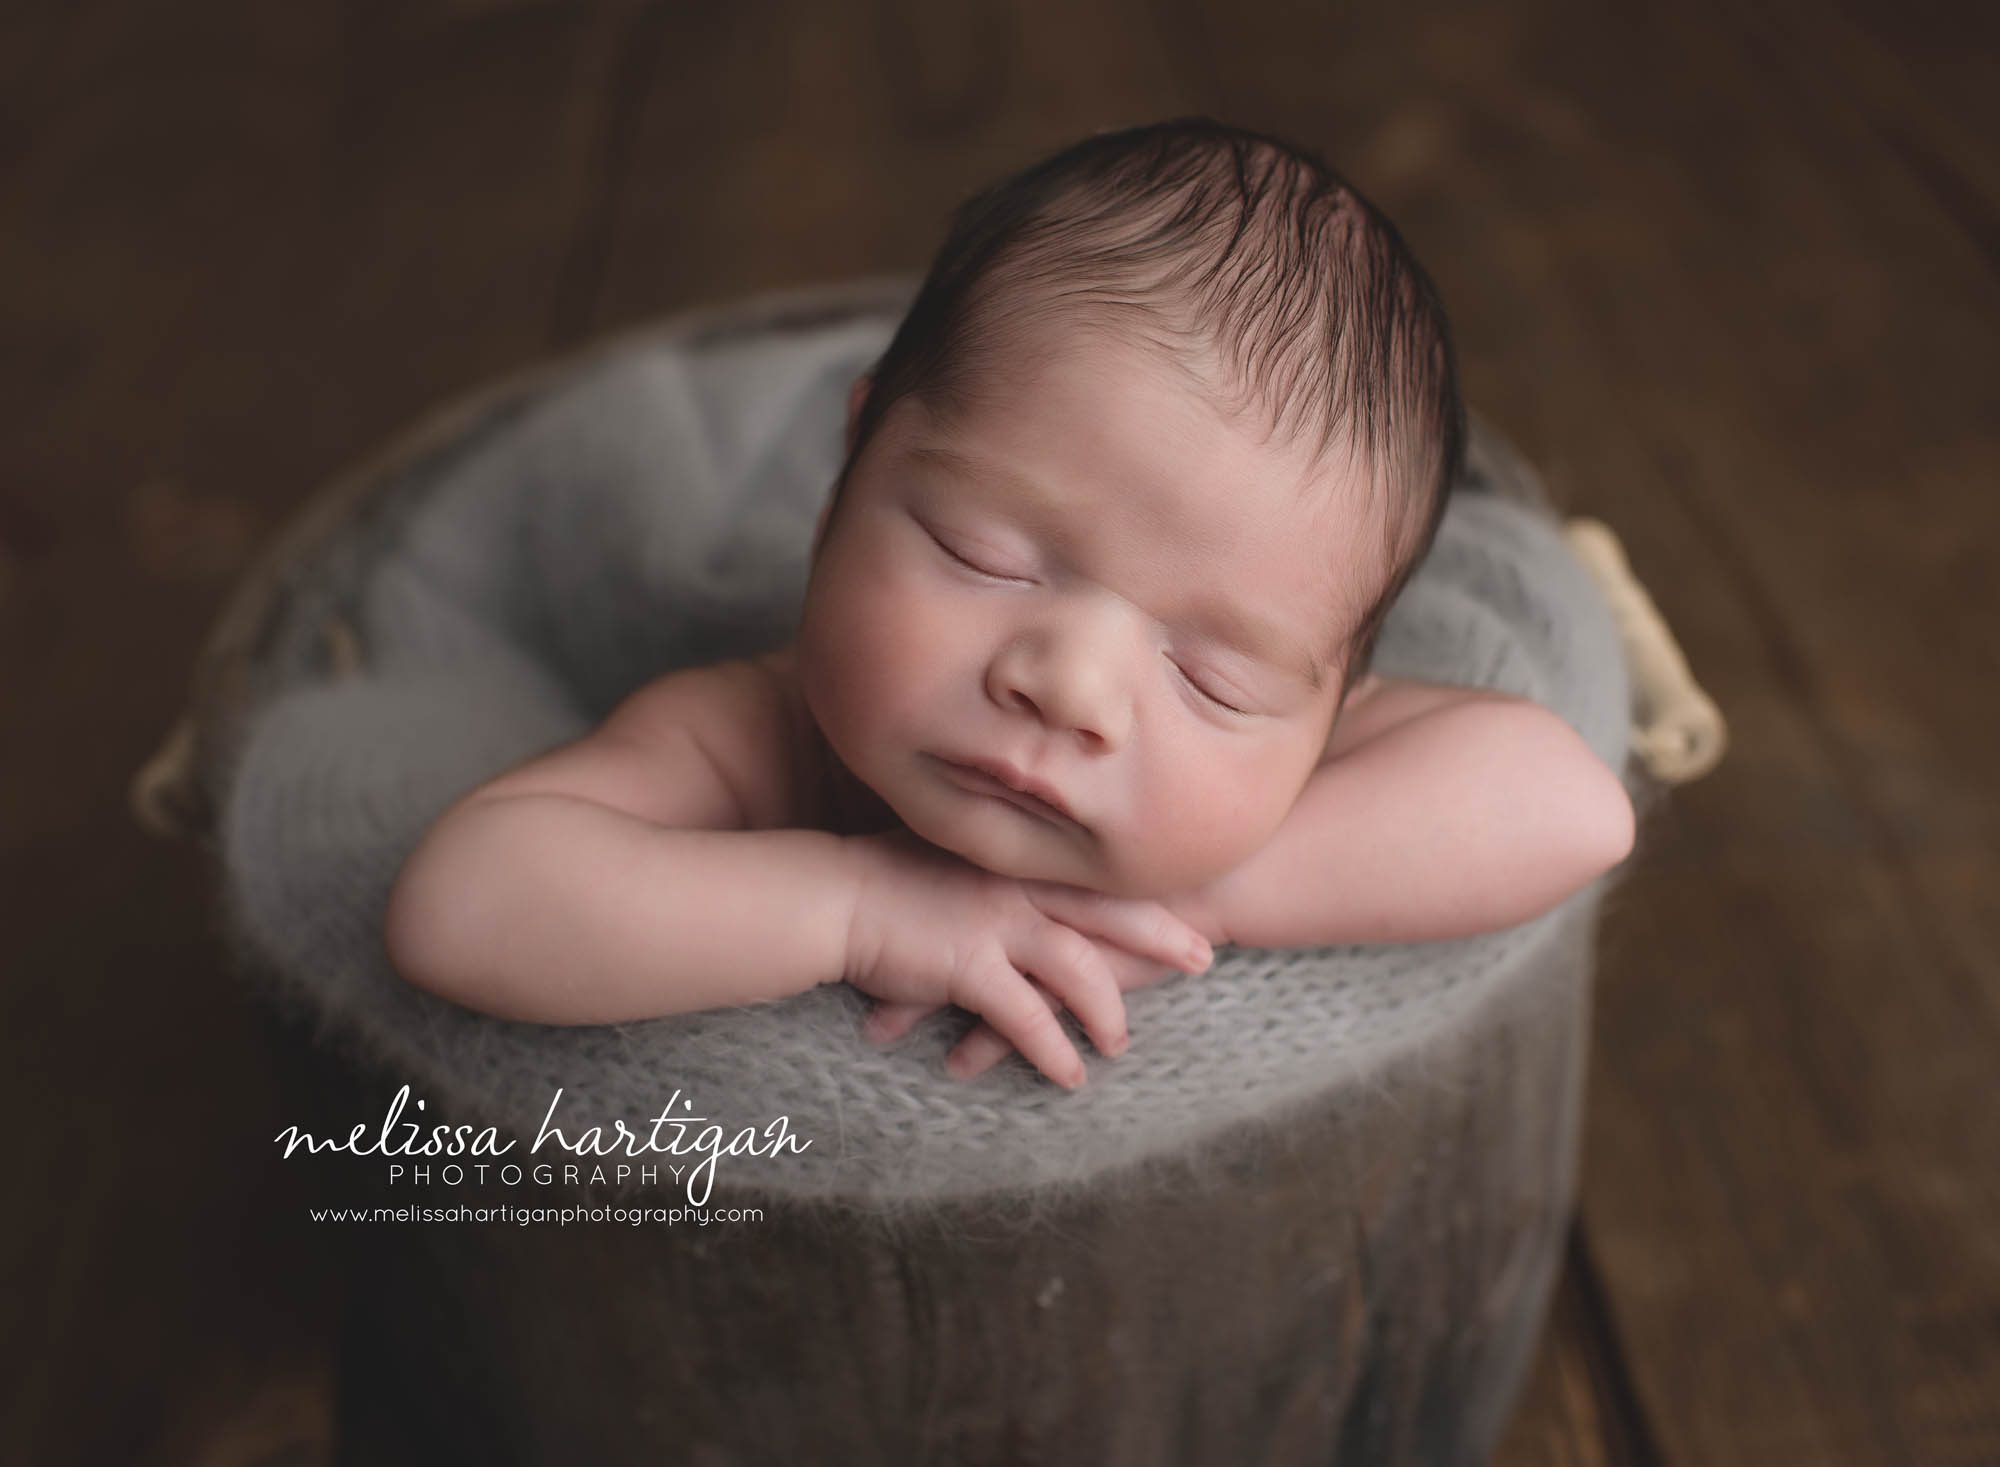 CT Newborn Photographer baby boy sleeping in wooden barrel with gray blanket